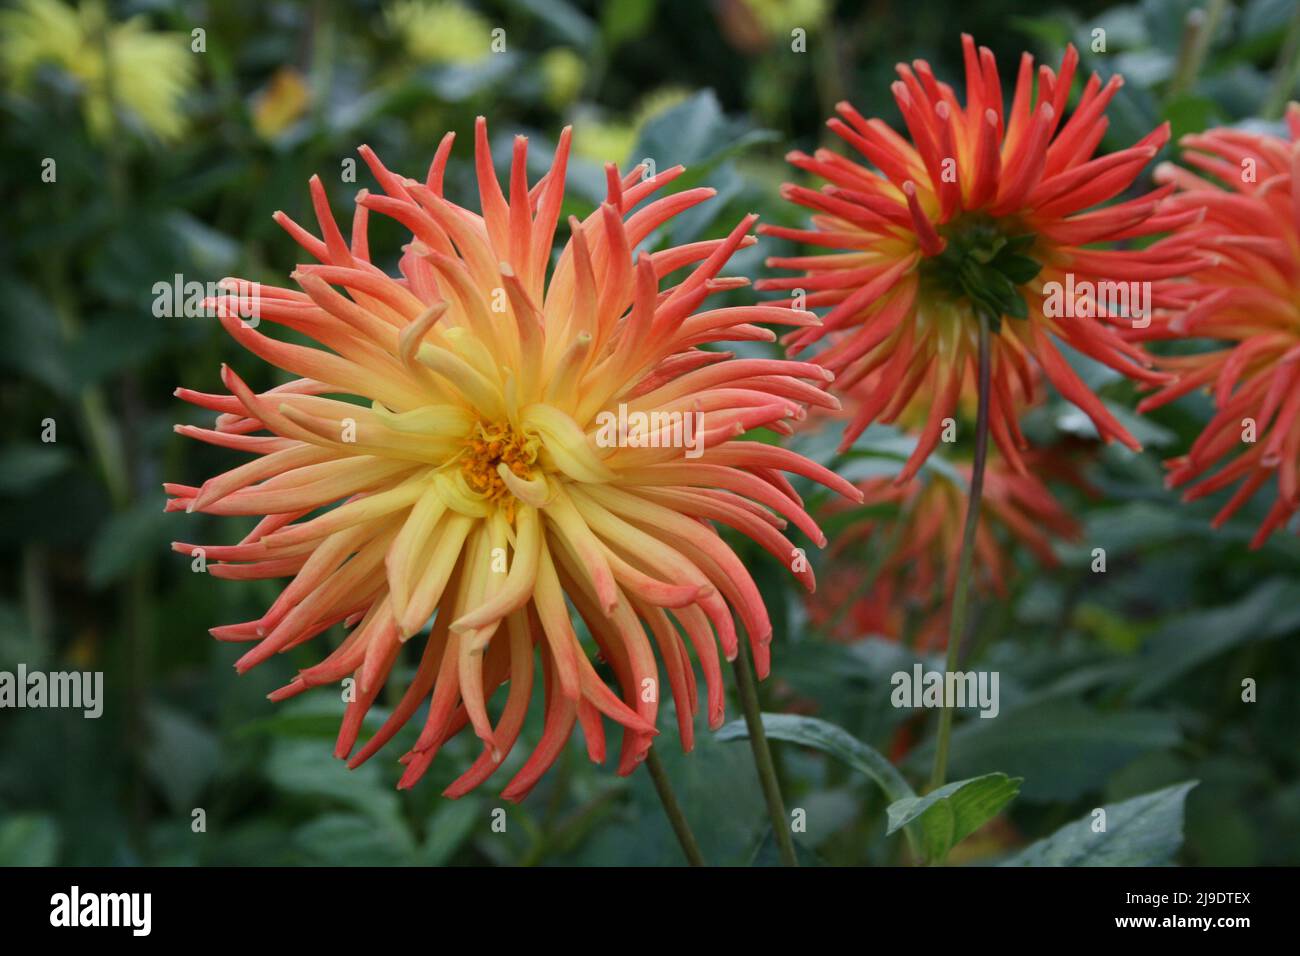 DAHLIAS FLOWERS 'ELNOR FIESTA' IN BLOOM Stock Photo